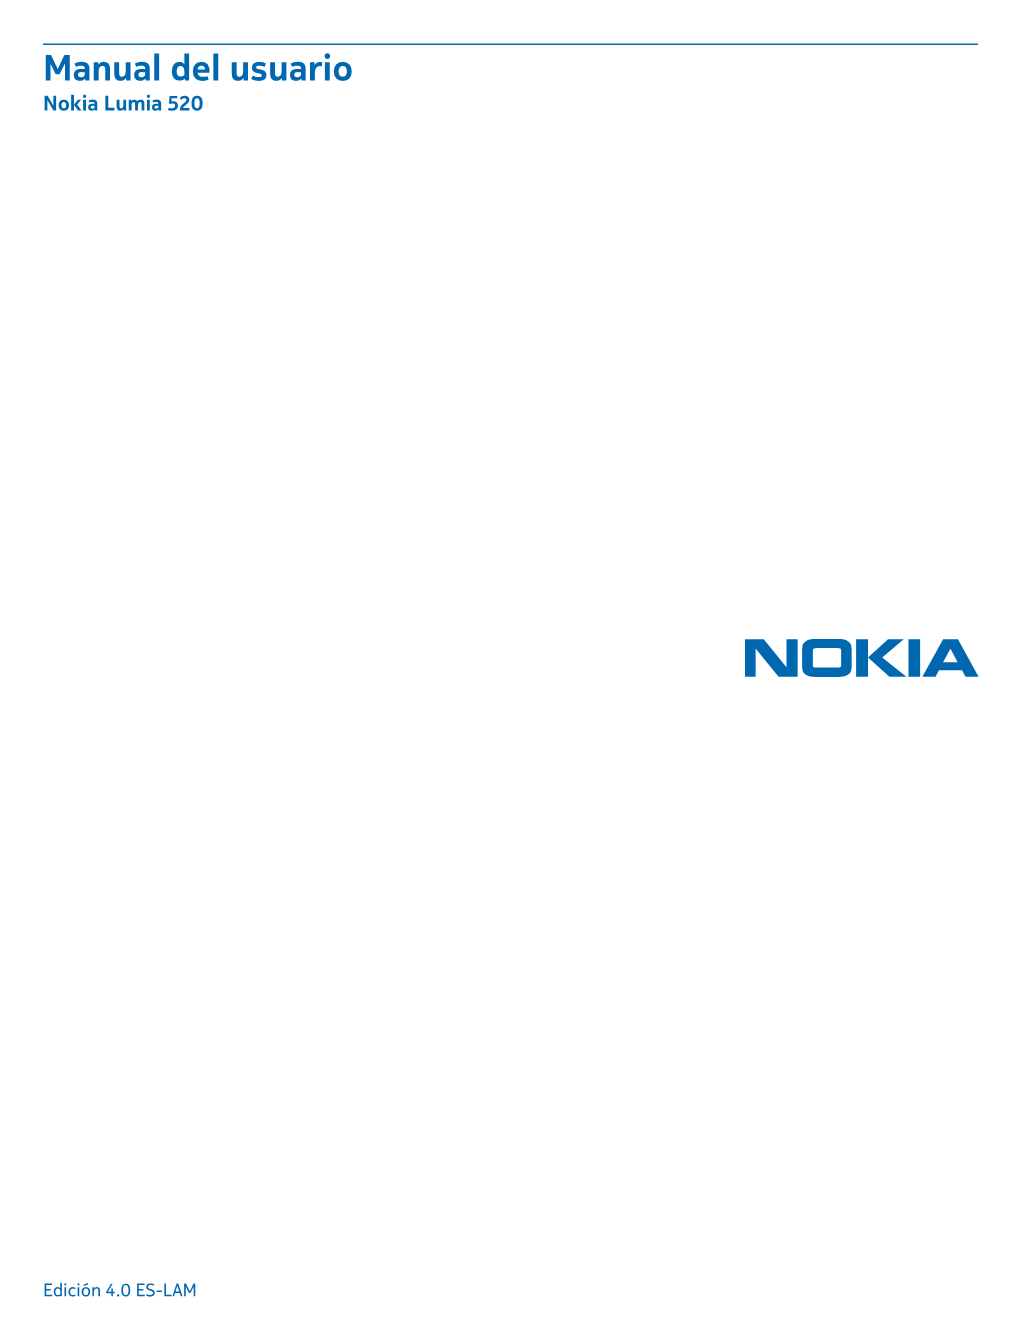 Manual Del Usuario Para Nokia Lumia